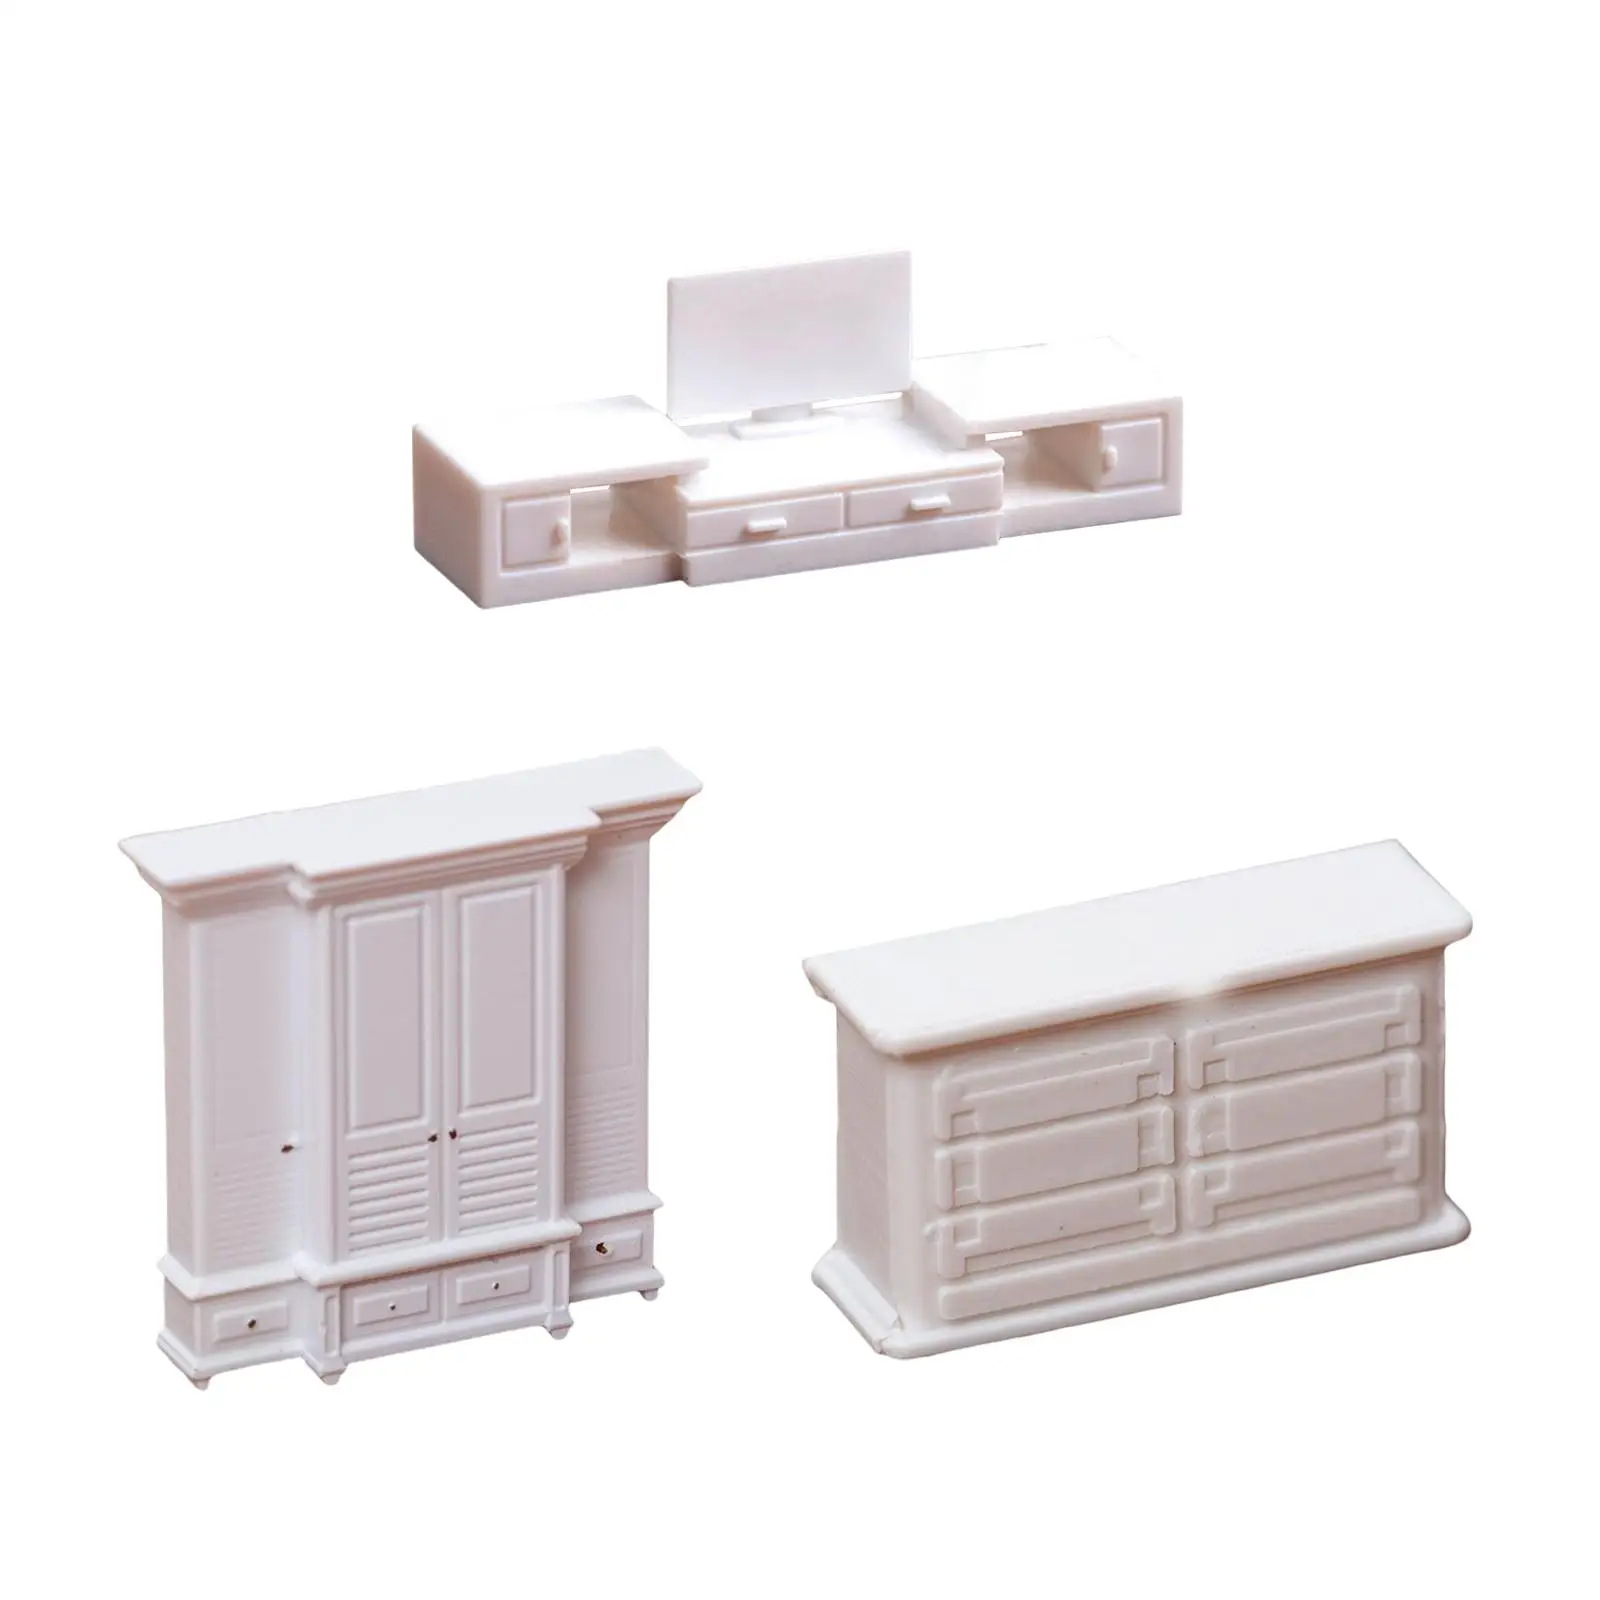 Dollhouse Furniture Realistic Miniature Bedside Table Mini Furniture Model for Photo Props DIY Scene Ornament Diorama Layout